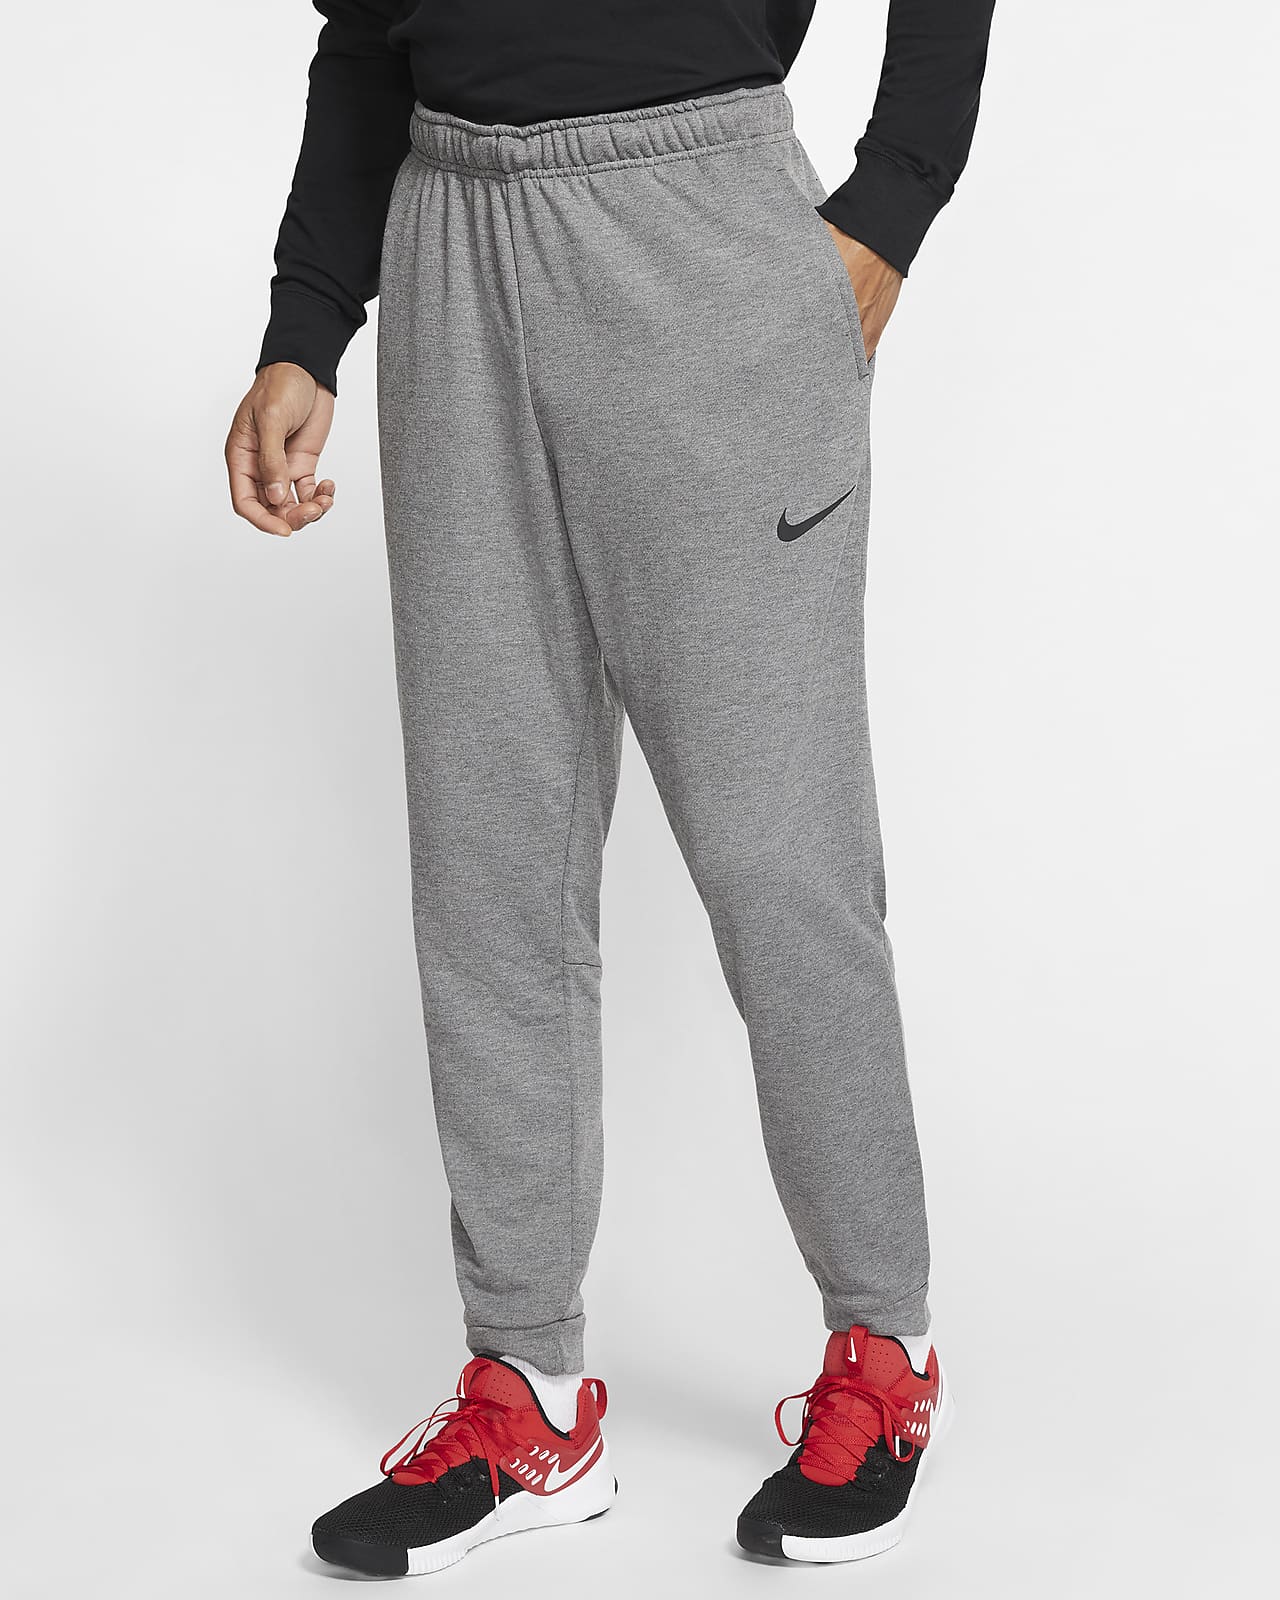 Pantalones de de tejido Fleece para Nike Dri-FIT. .com